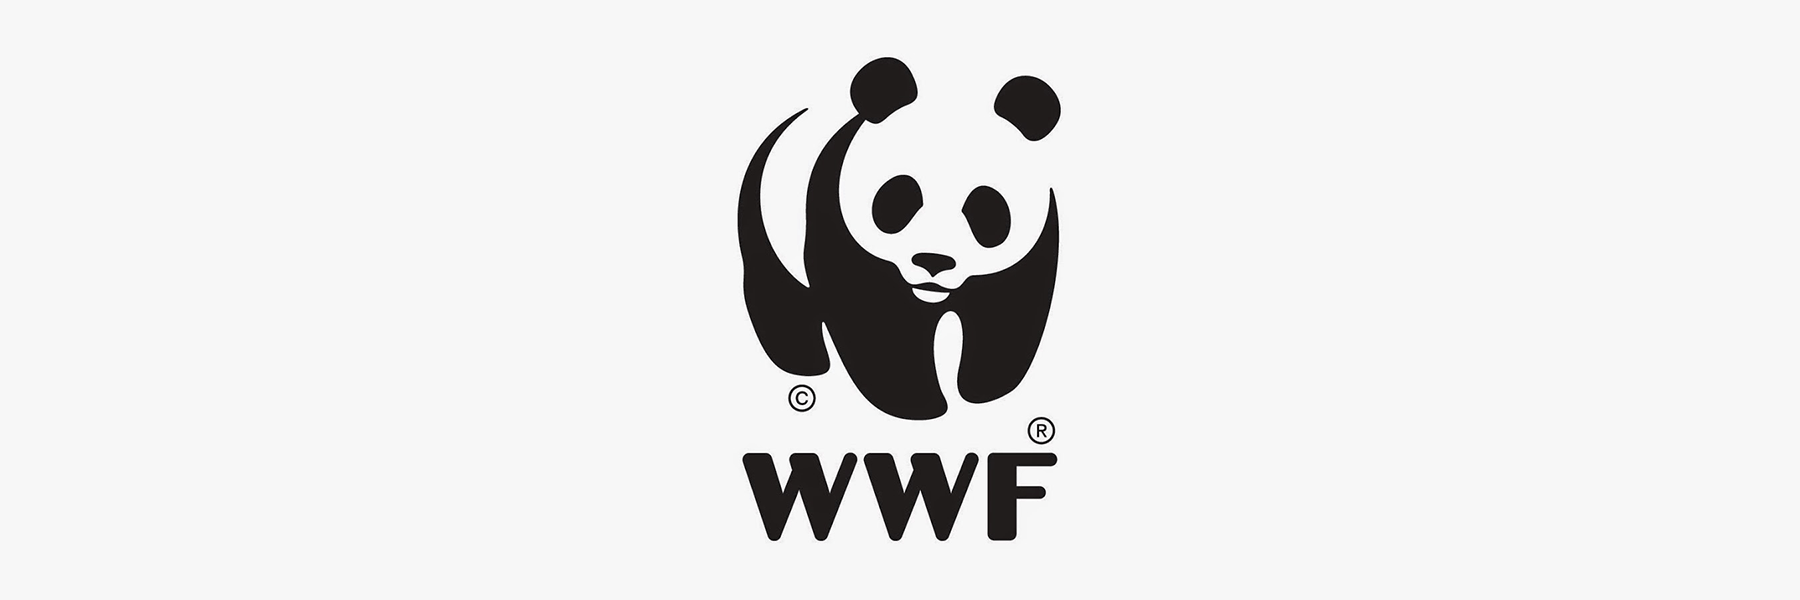 Photo of the WWF trademark panda logo